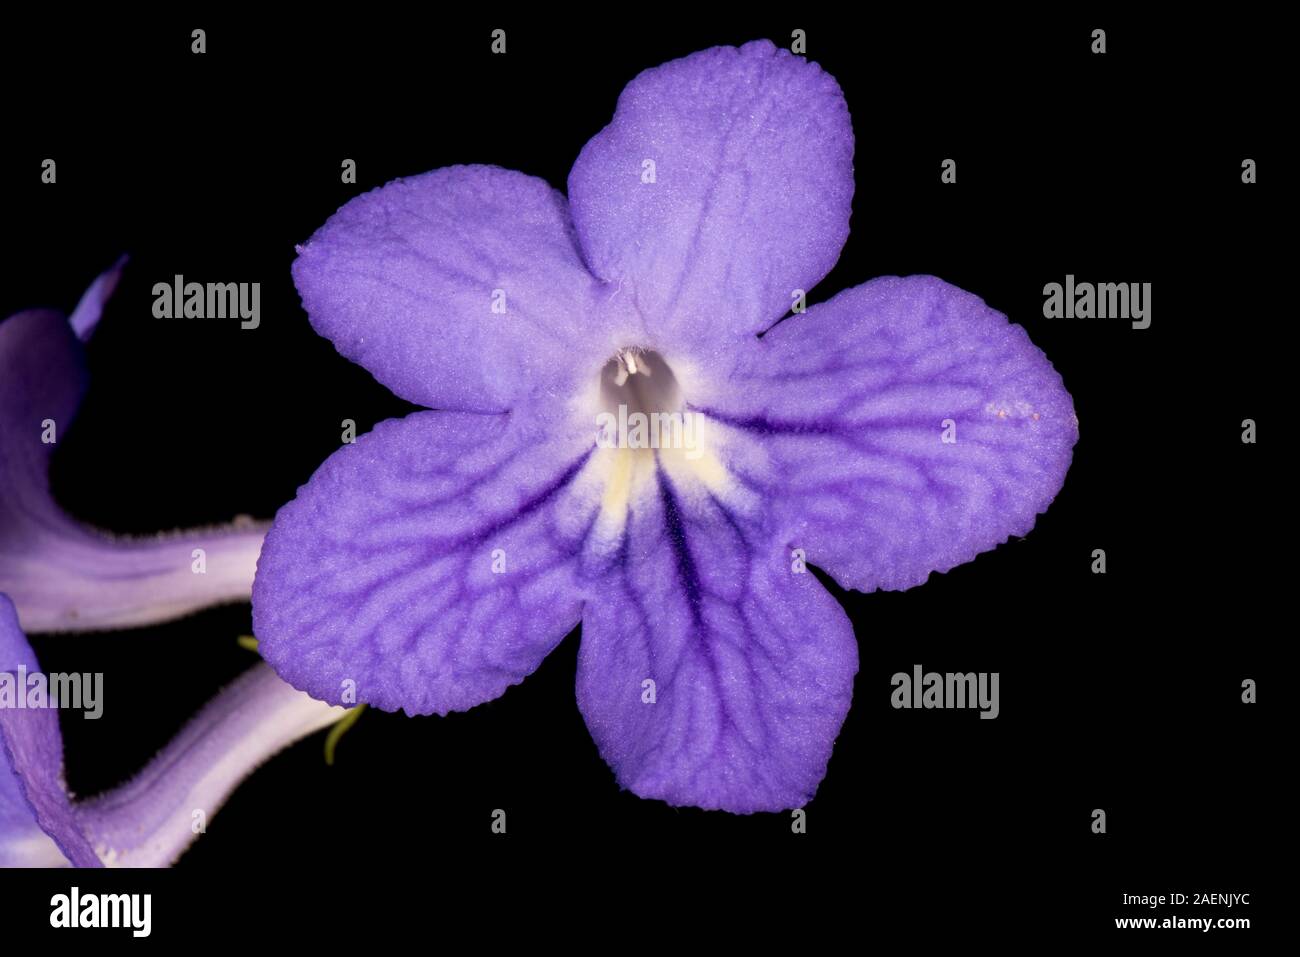 Cape primrose, Streptocarpus spp., blue purple flower with dark veins on a popular house plant originating from Afrotropical regions Stock Photo